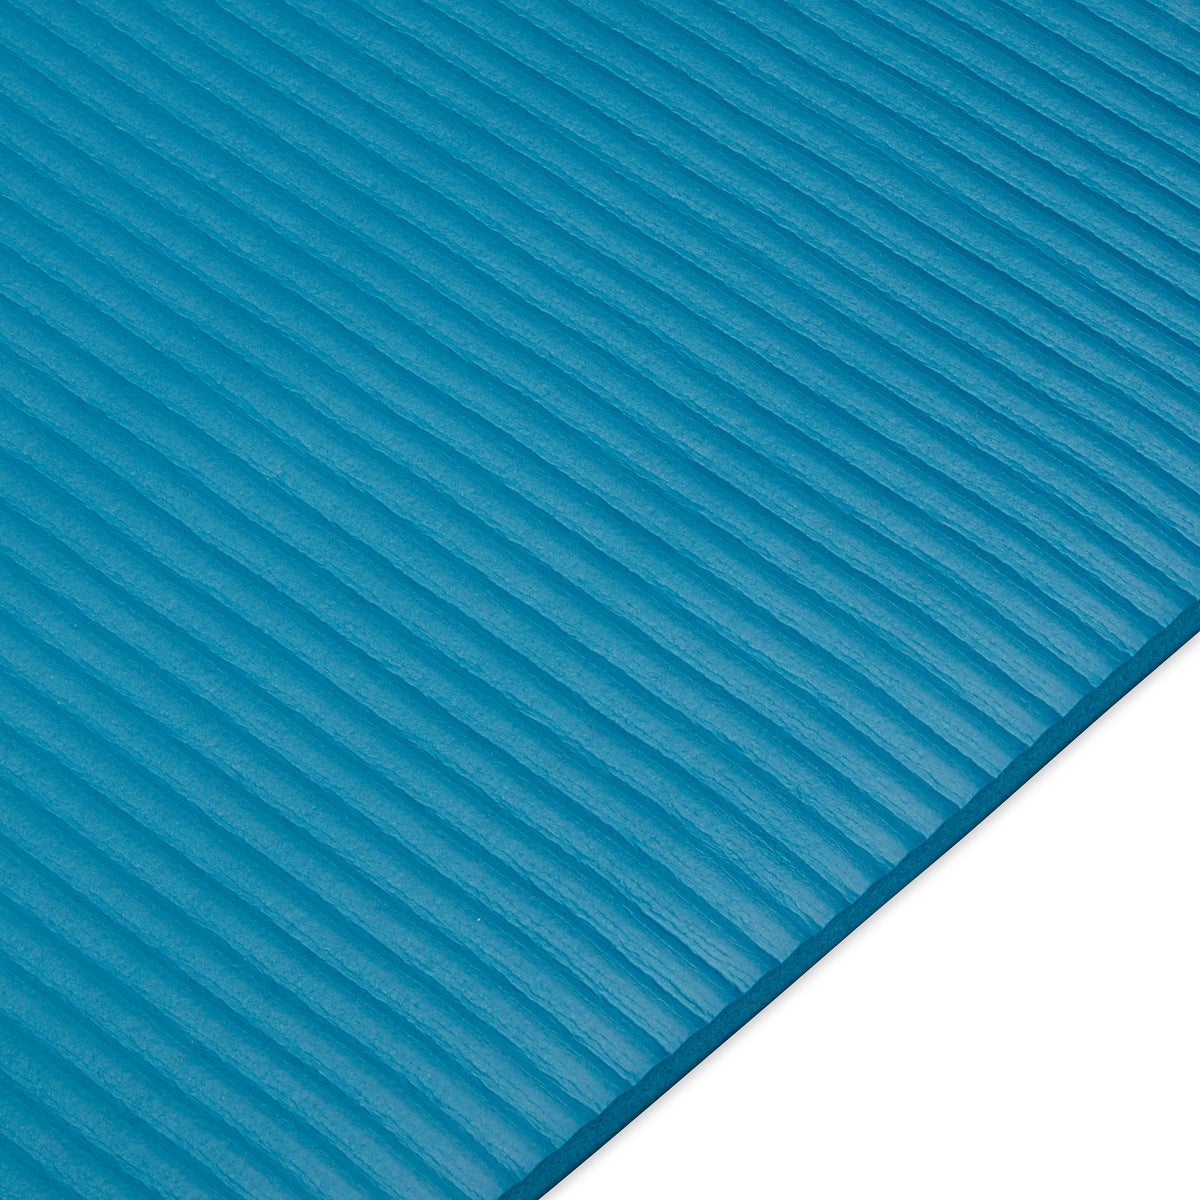 Gaiam Fitness Mat (10mm) Blue up close